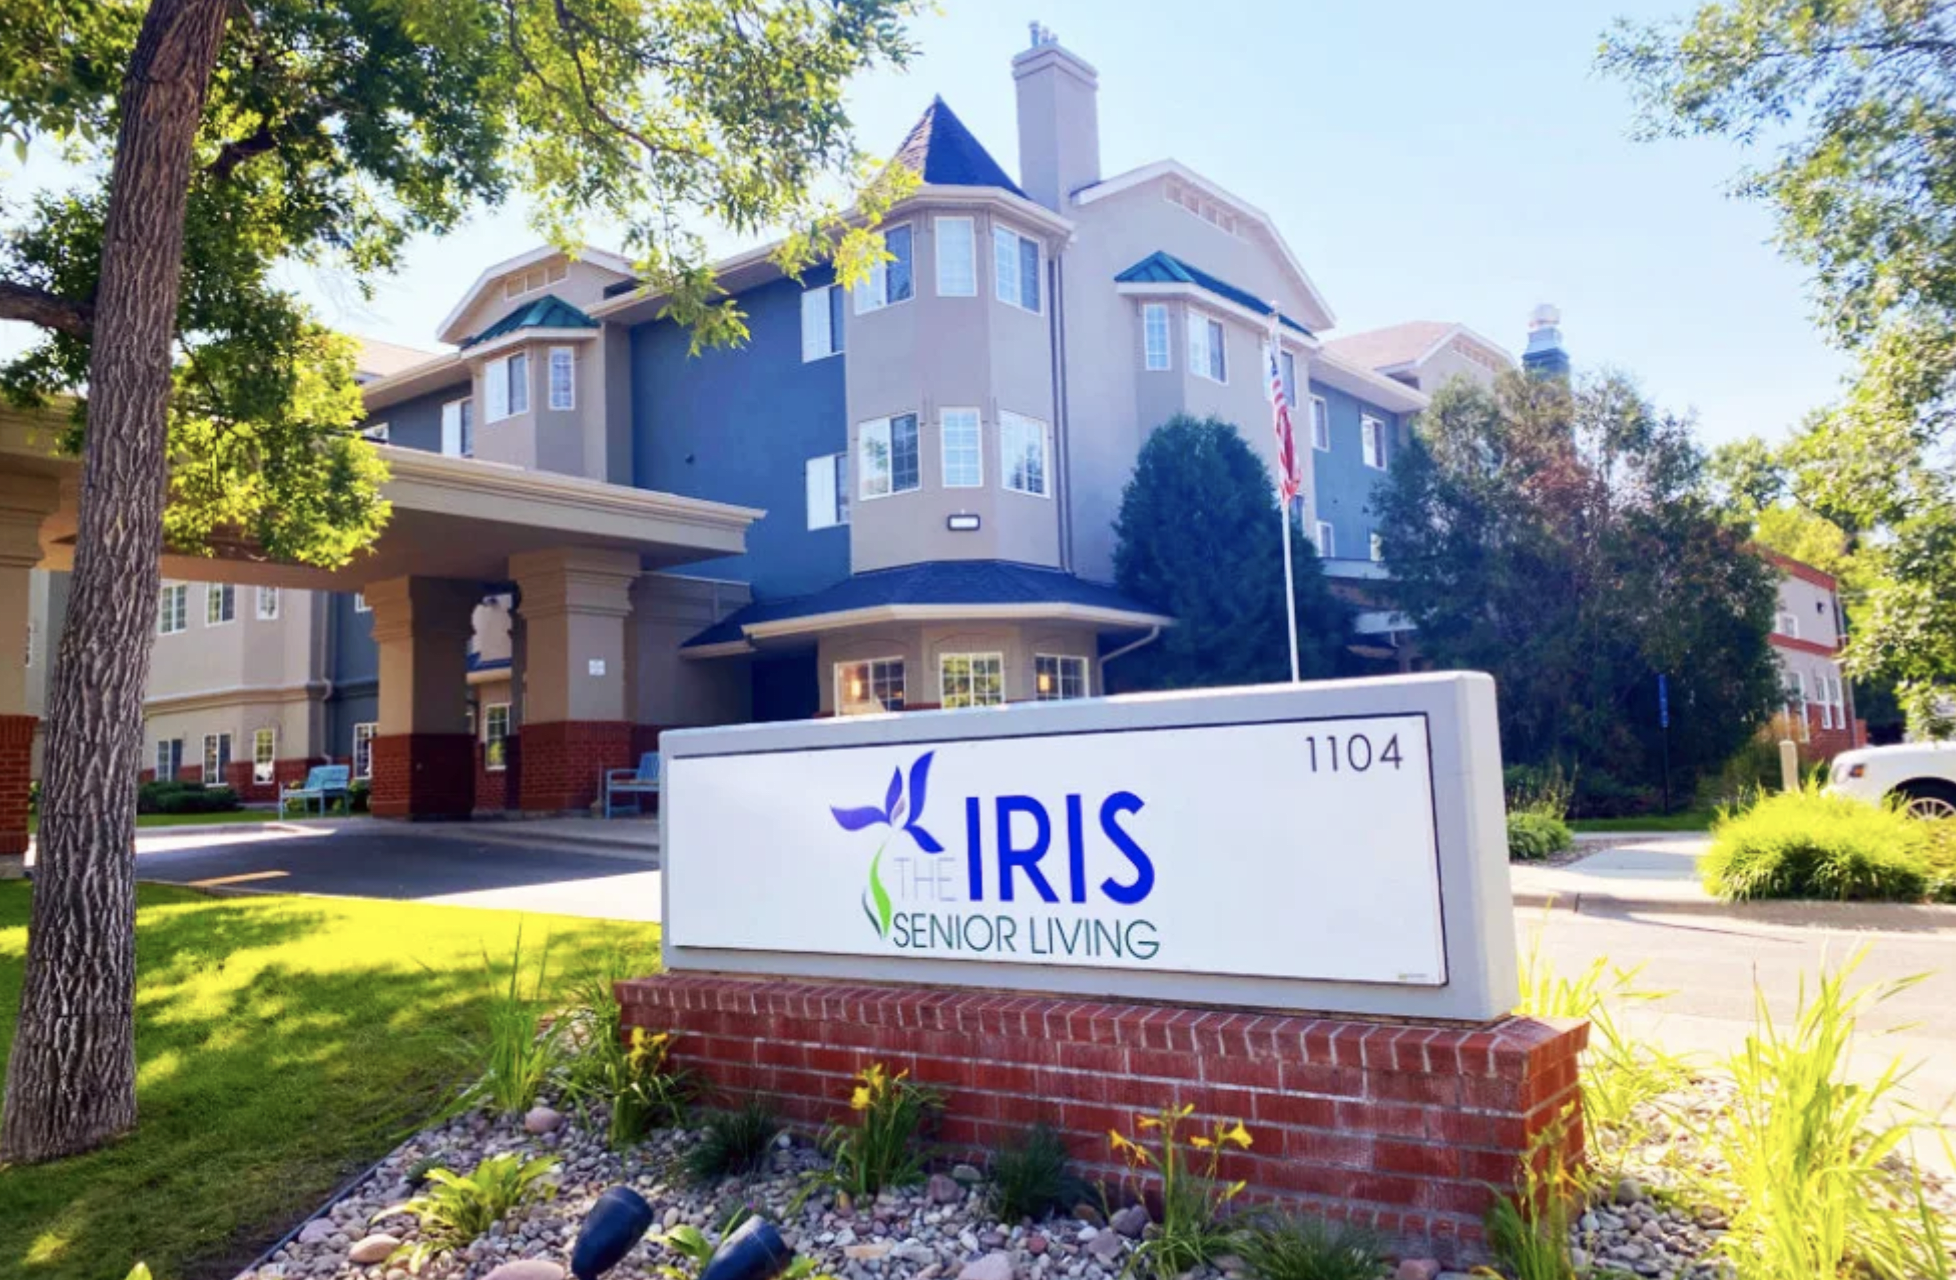 The Iris community exterior